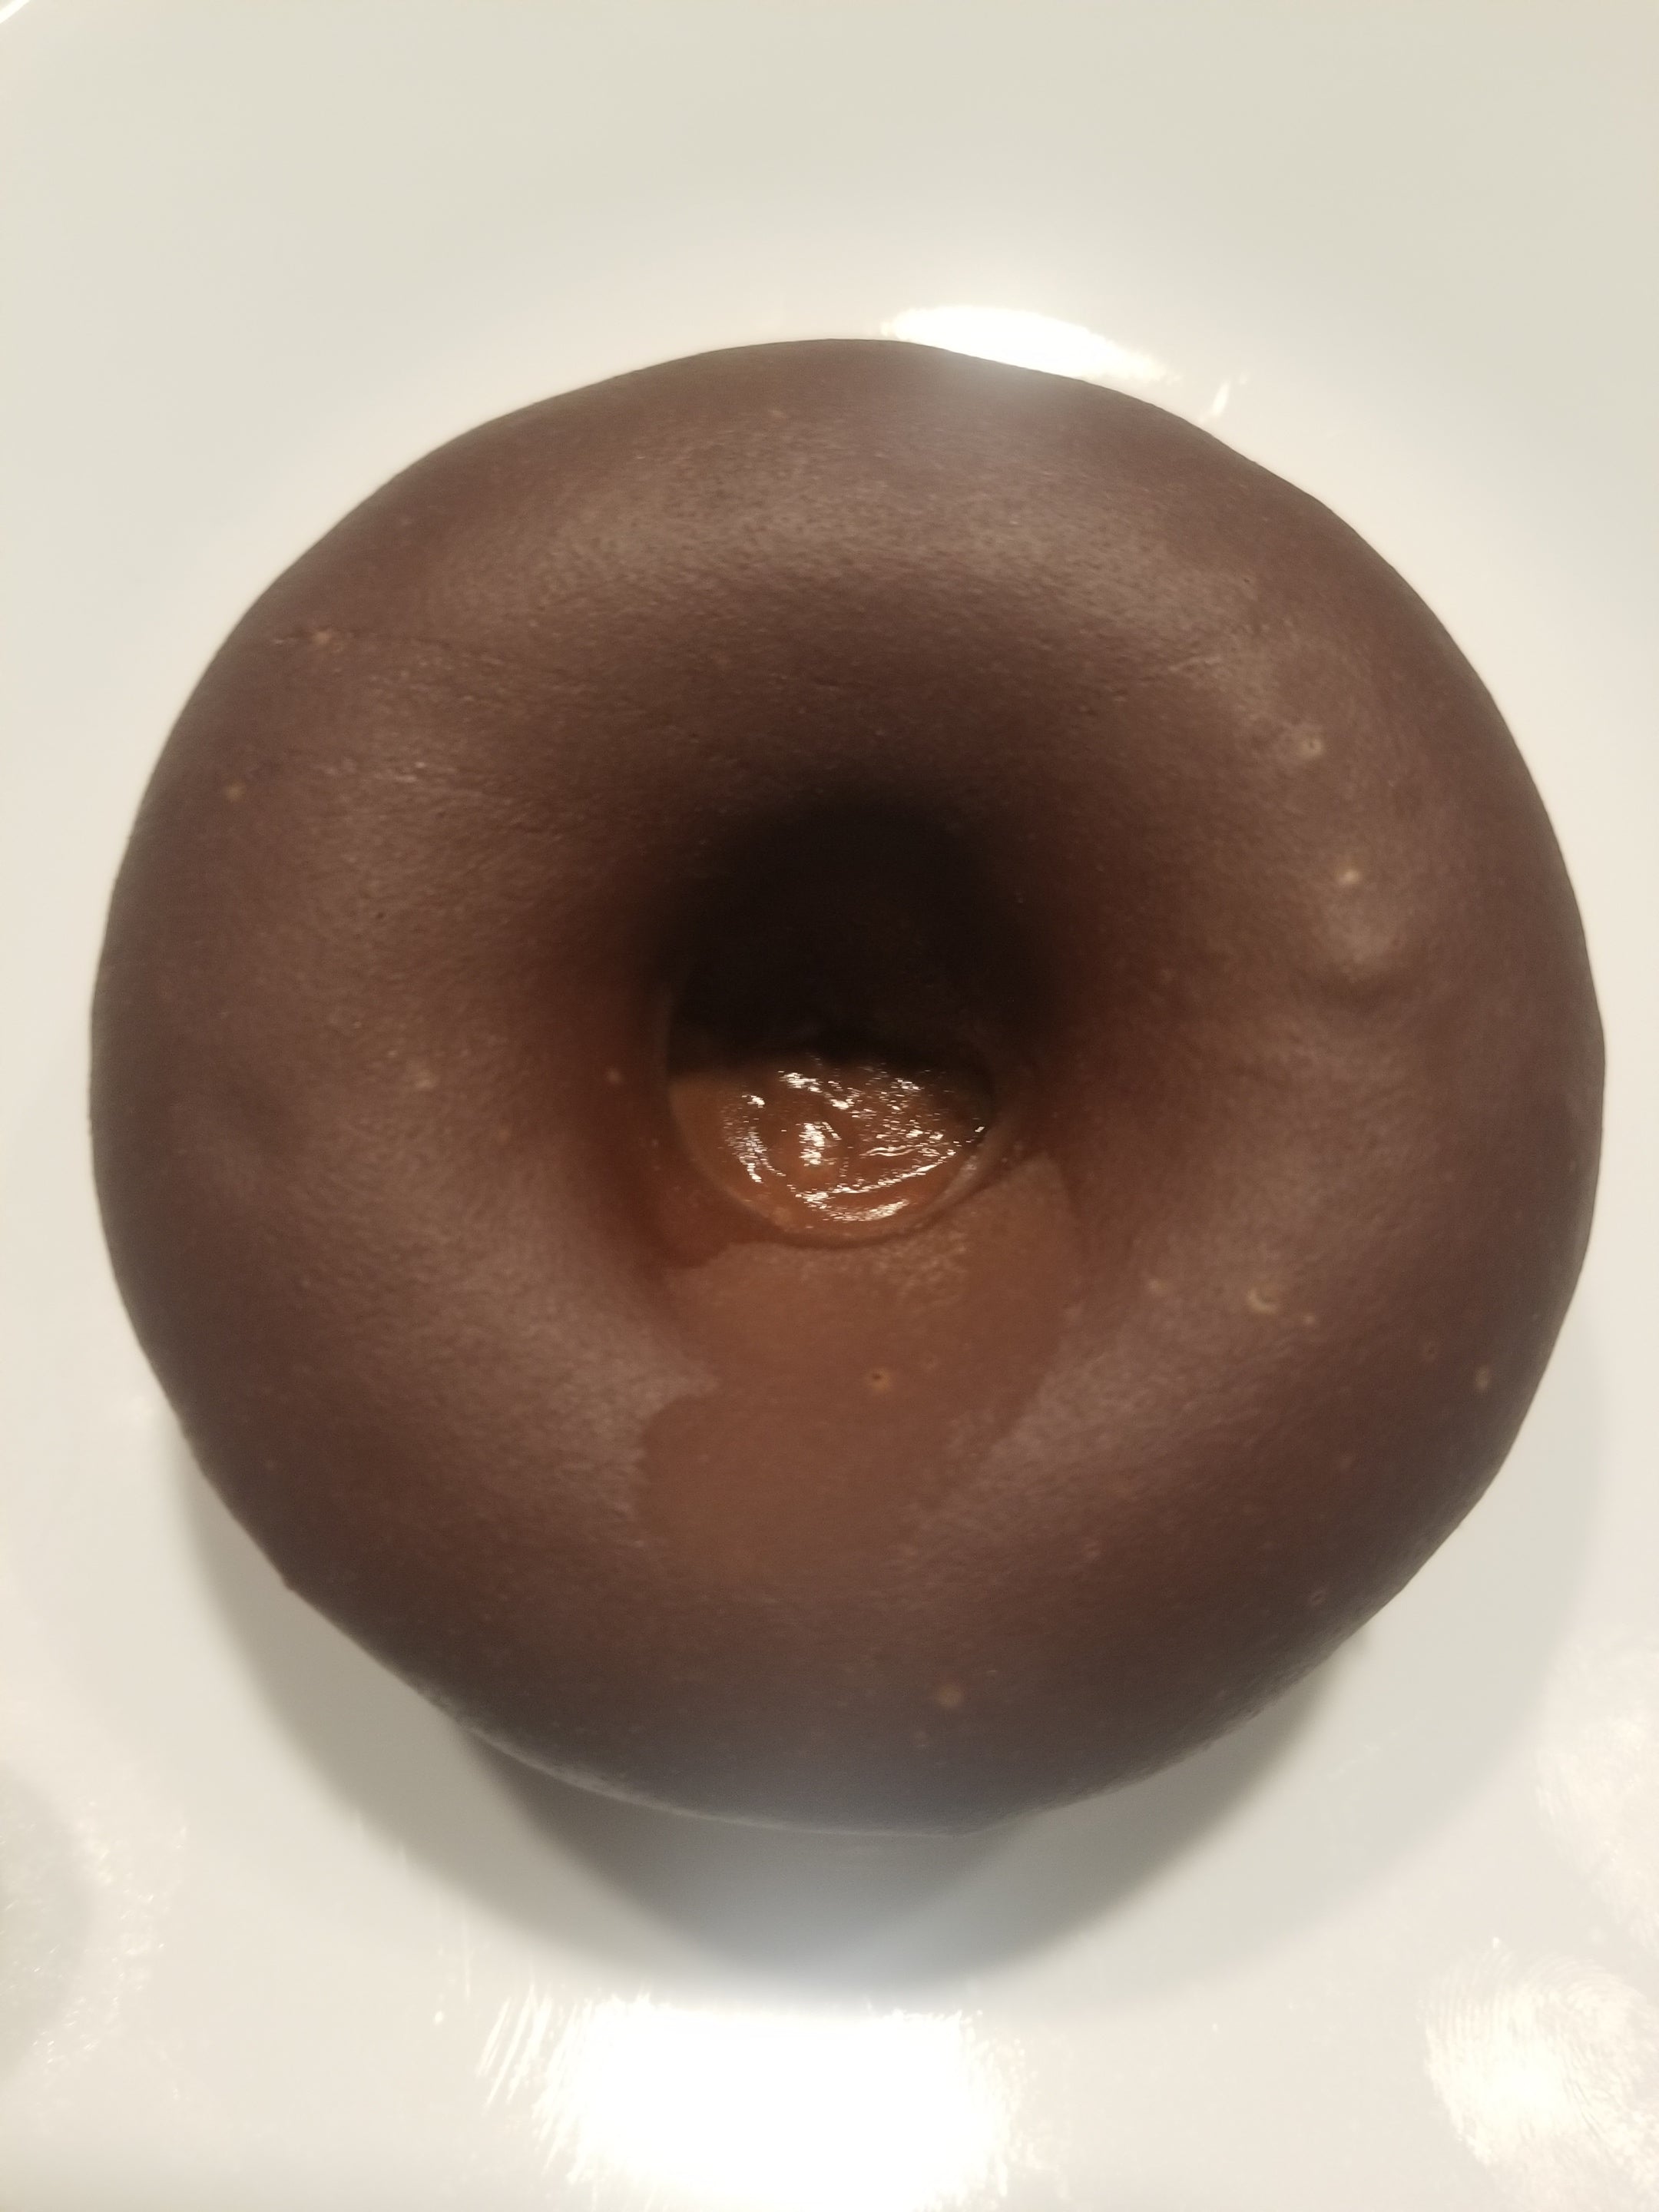 Lo-Ca Plain Donut with Chocolate Glaze (Calories 318 Net Carbs 3)